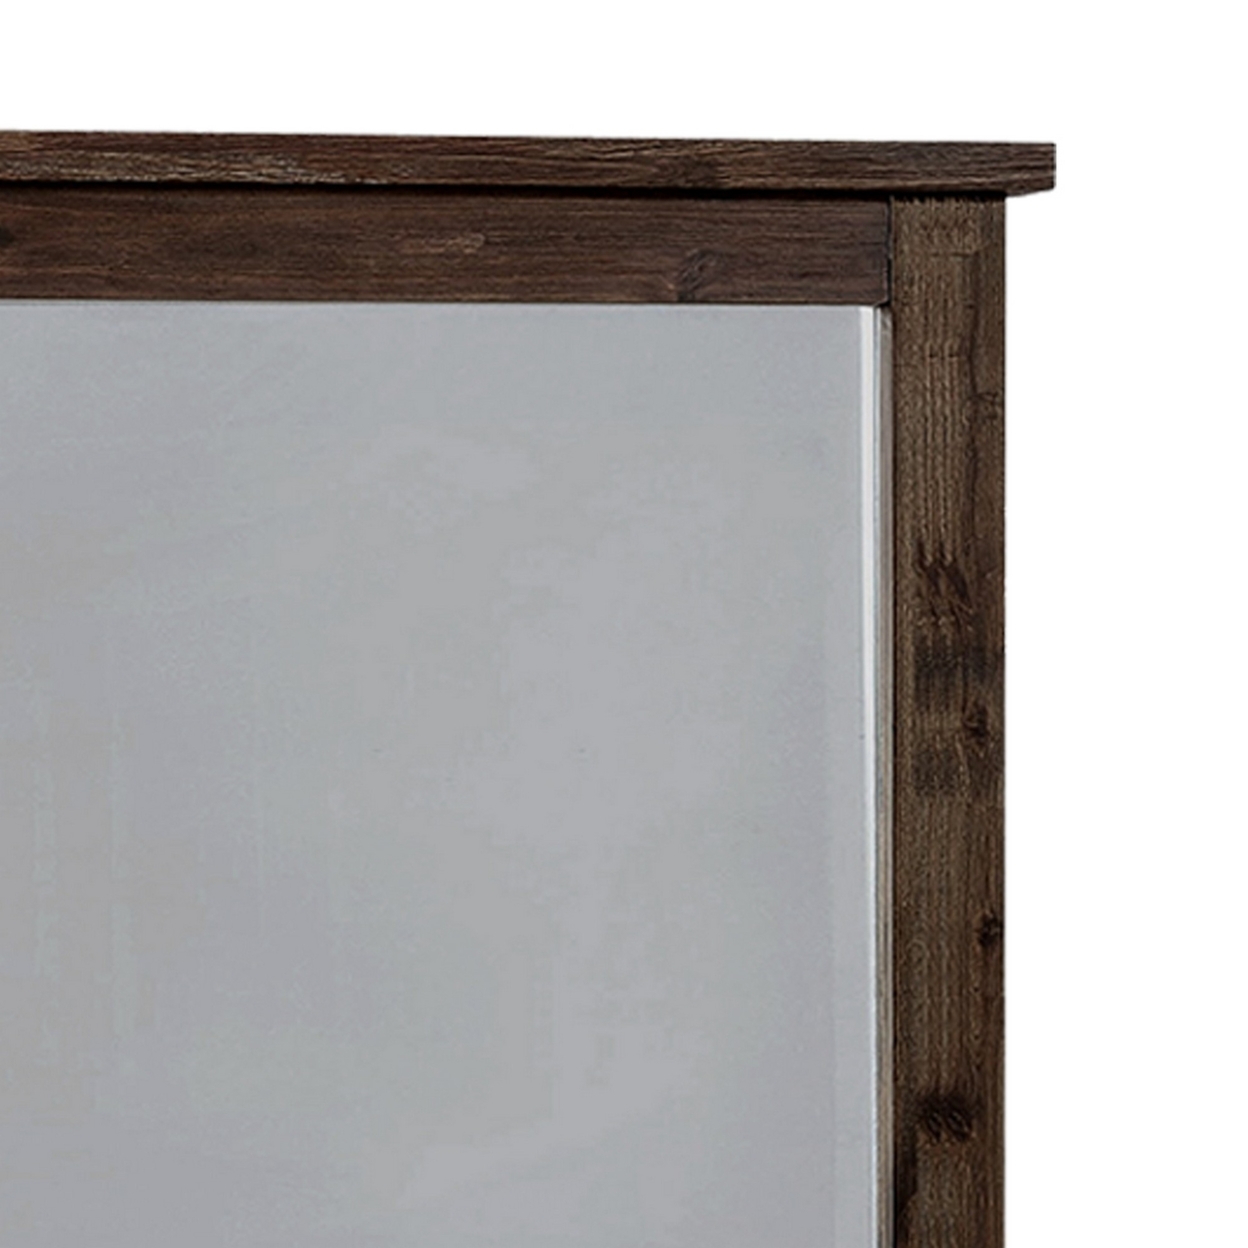 Rectangular Mirror With Wooden Encasing And Grains, Brown- Saltoro Sherpi